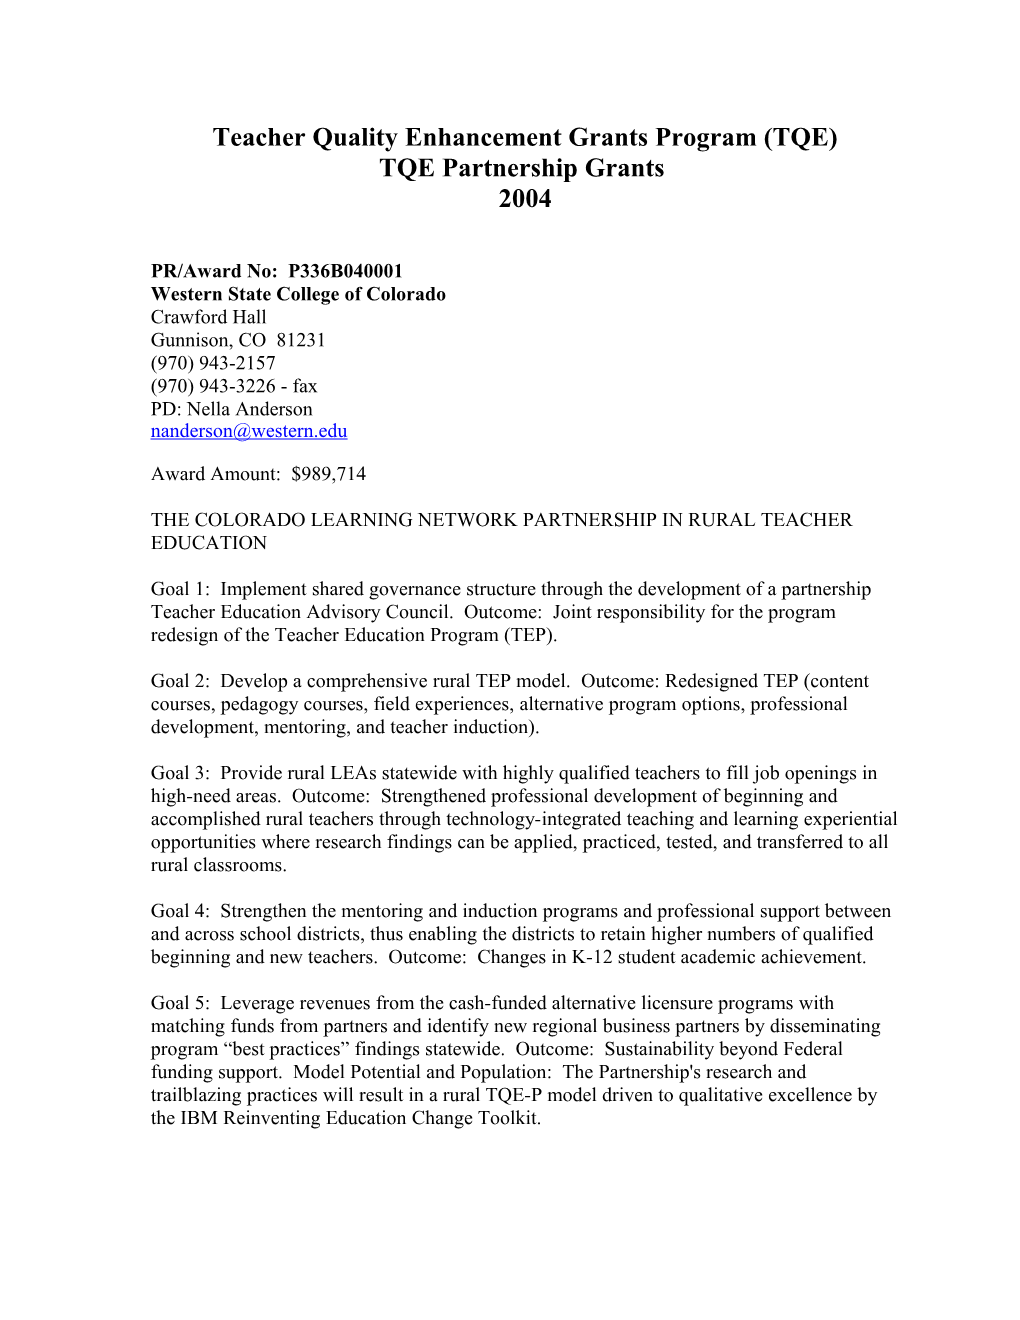 FY 2004 Partnership Grant Abstracts Teacher Quality Enhancement Grants Program (MS Word)